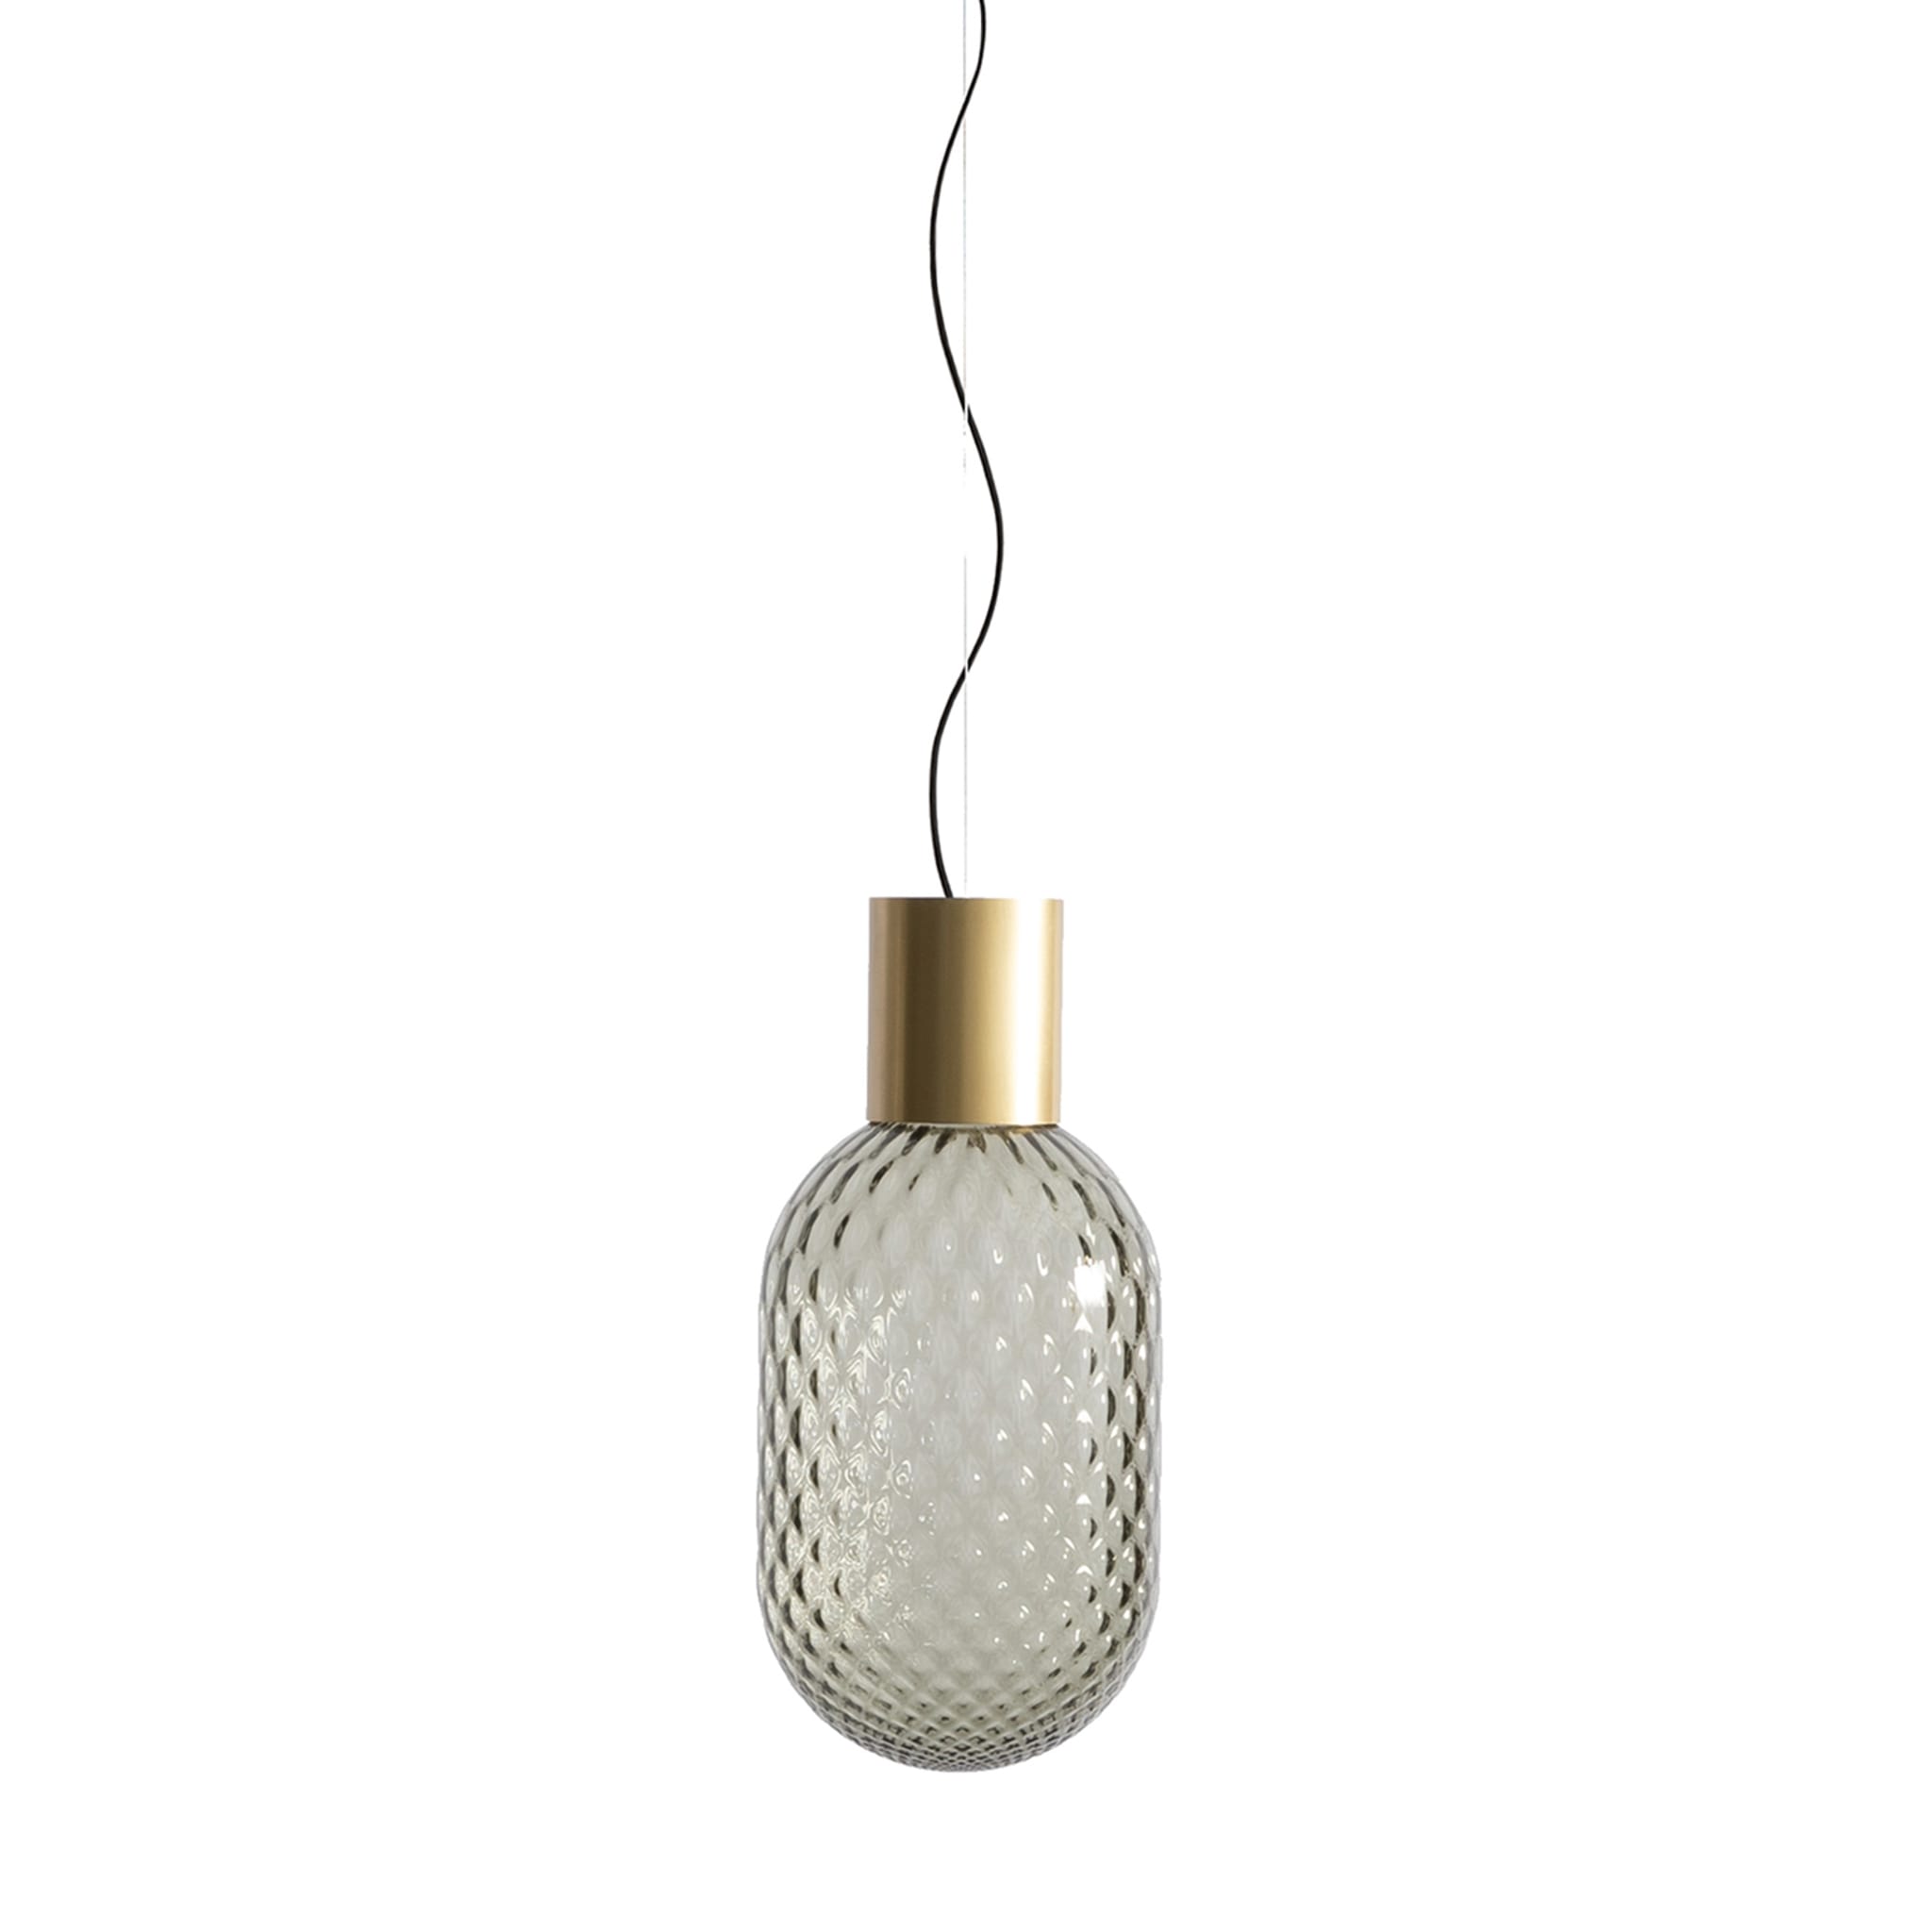 Bloom Natural Brass & Grey Transparent Glass Pendant Lamp #1 - Main view